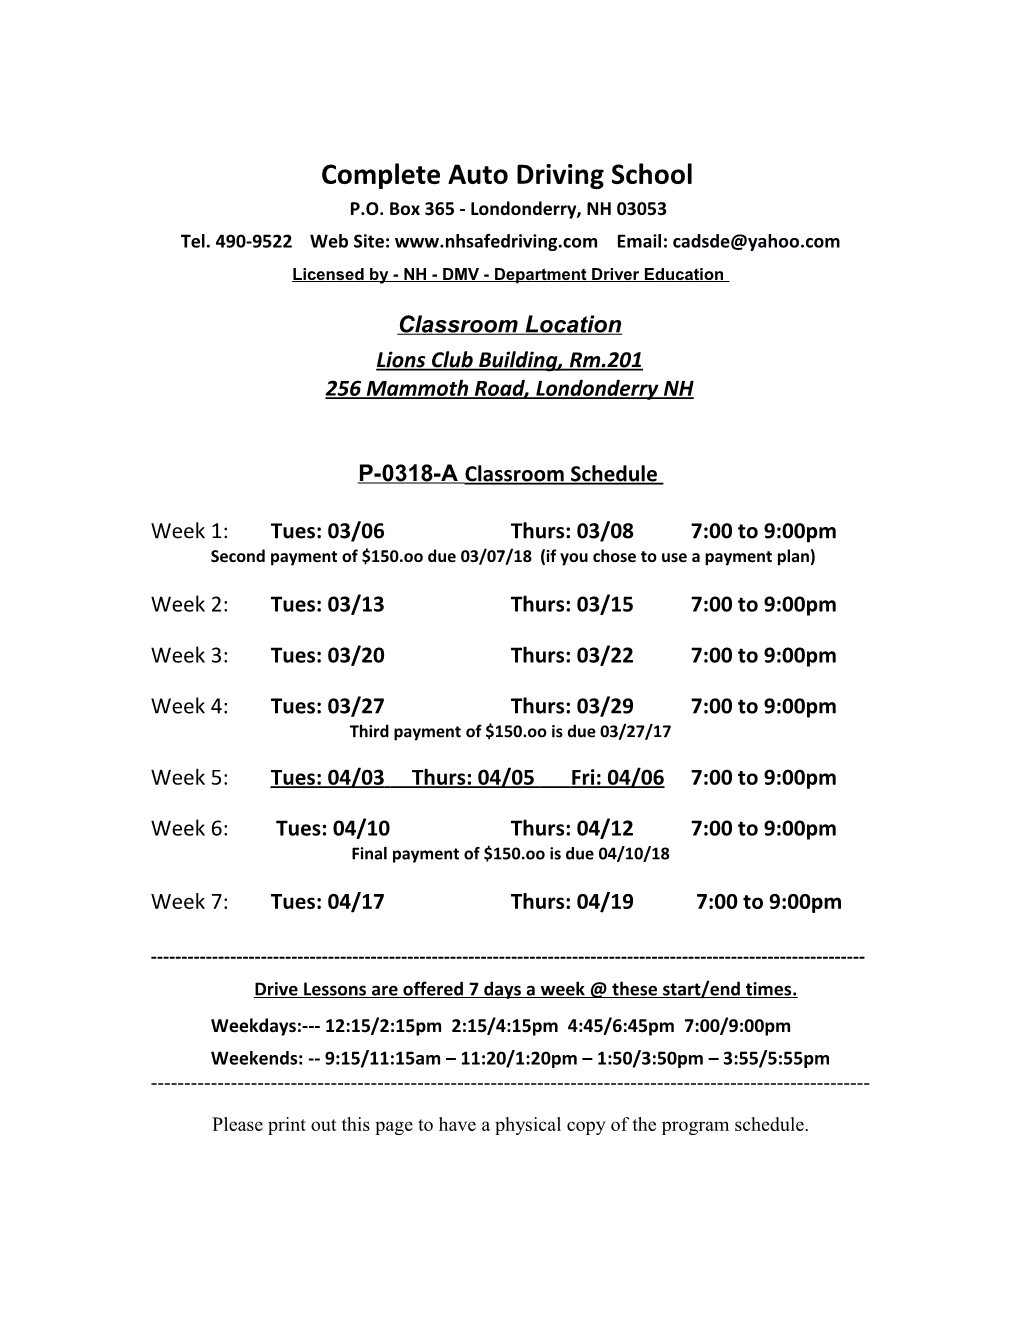 Complete Auto Driving School - 0318-A Program